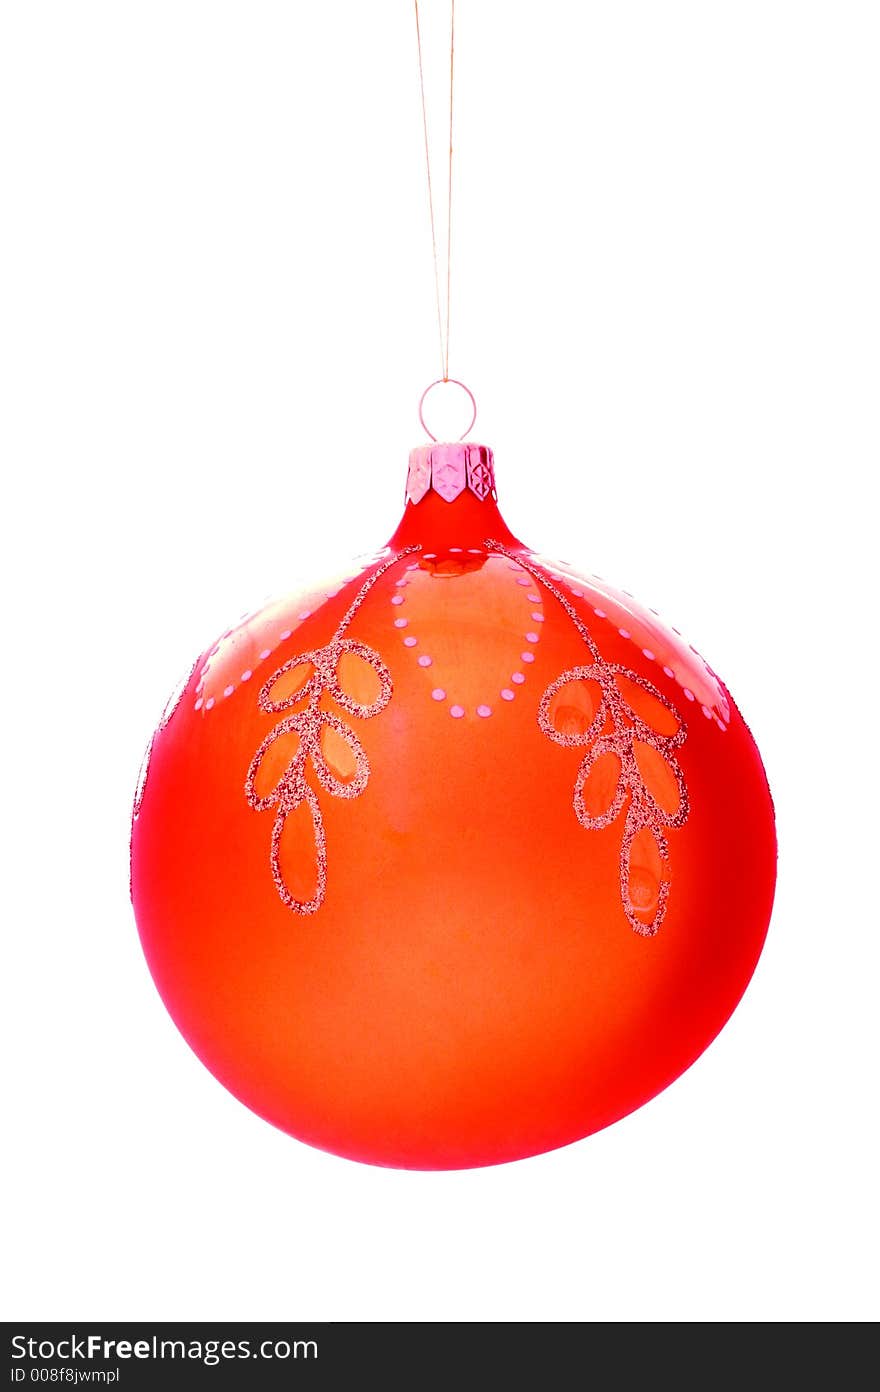 Christmas-tree decorations ball